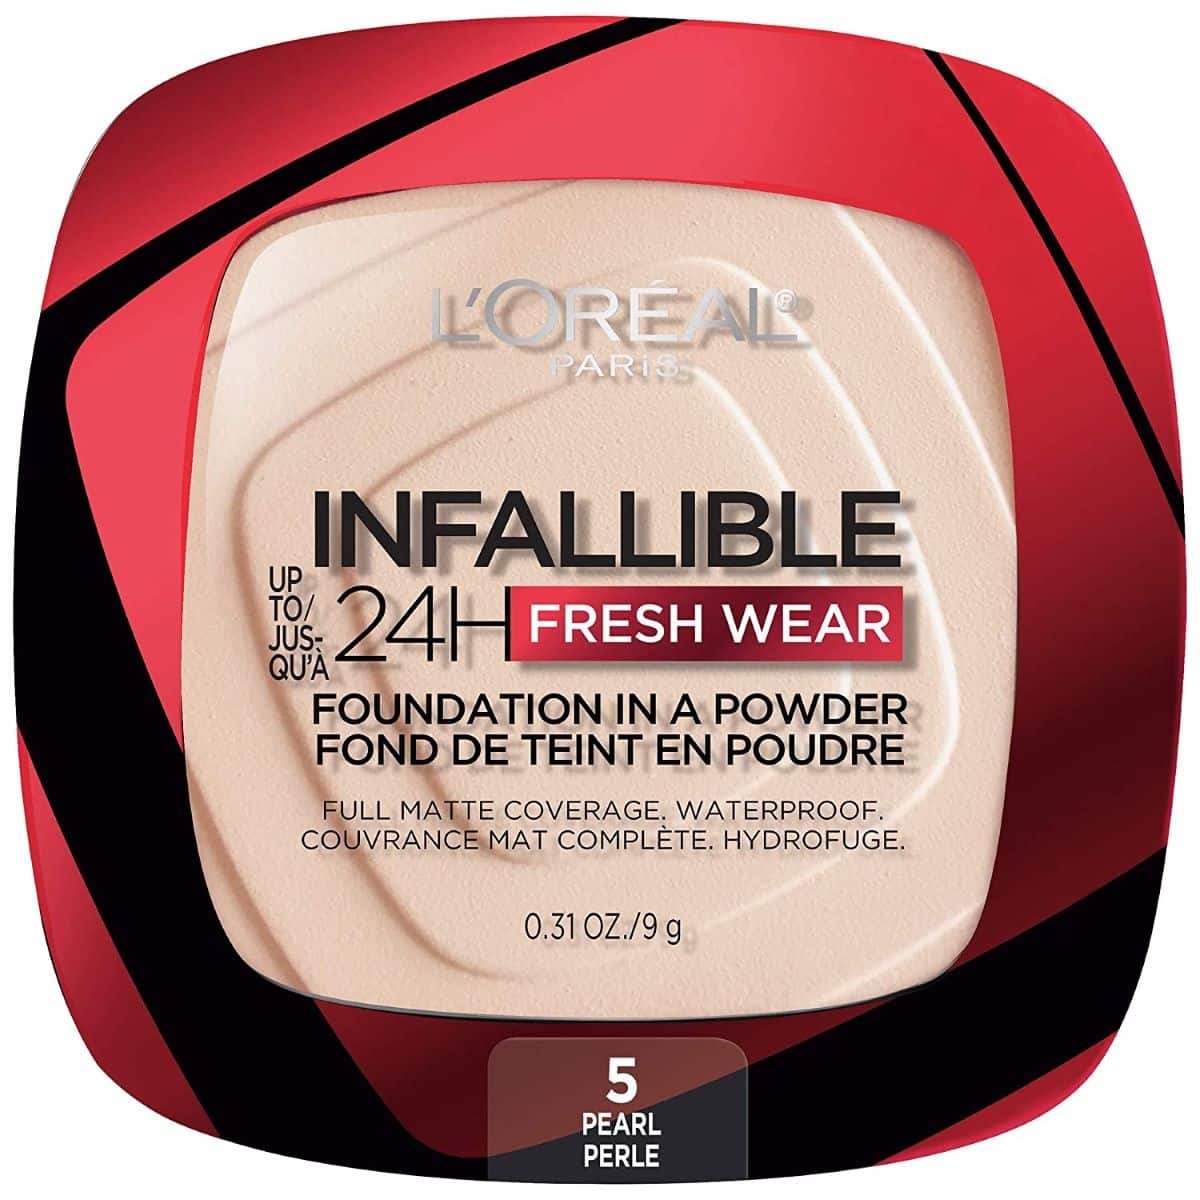 L’Oréal Paris Infallible 24HR Fresh Wear Foundation in a Powder